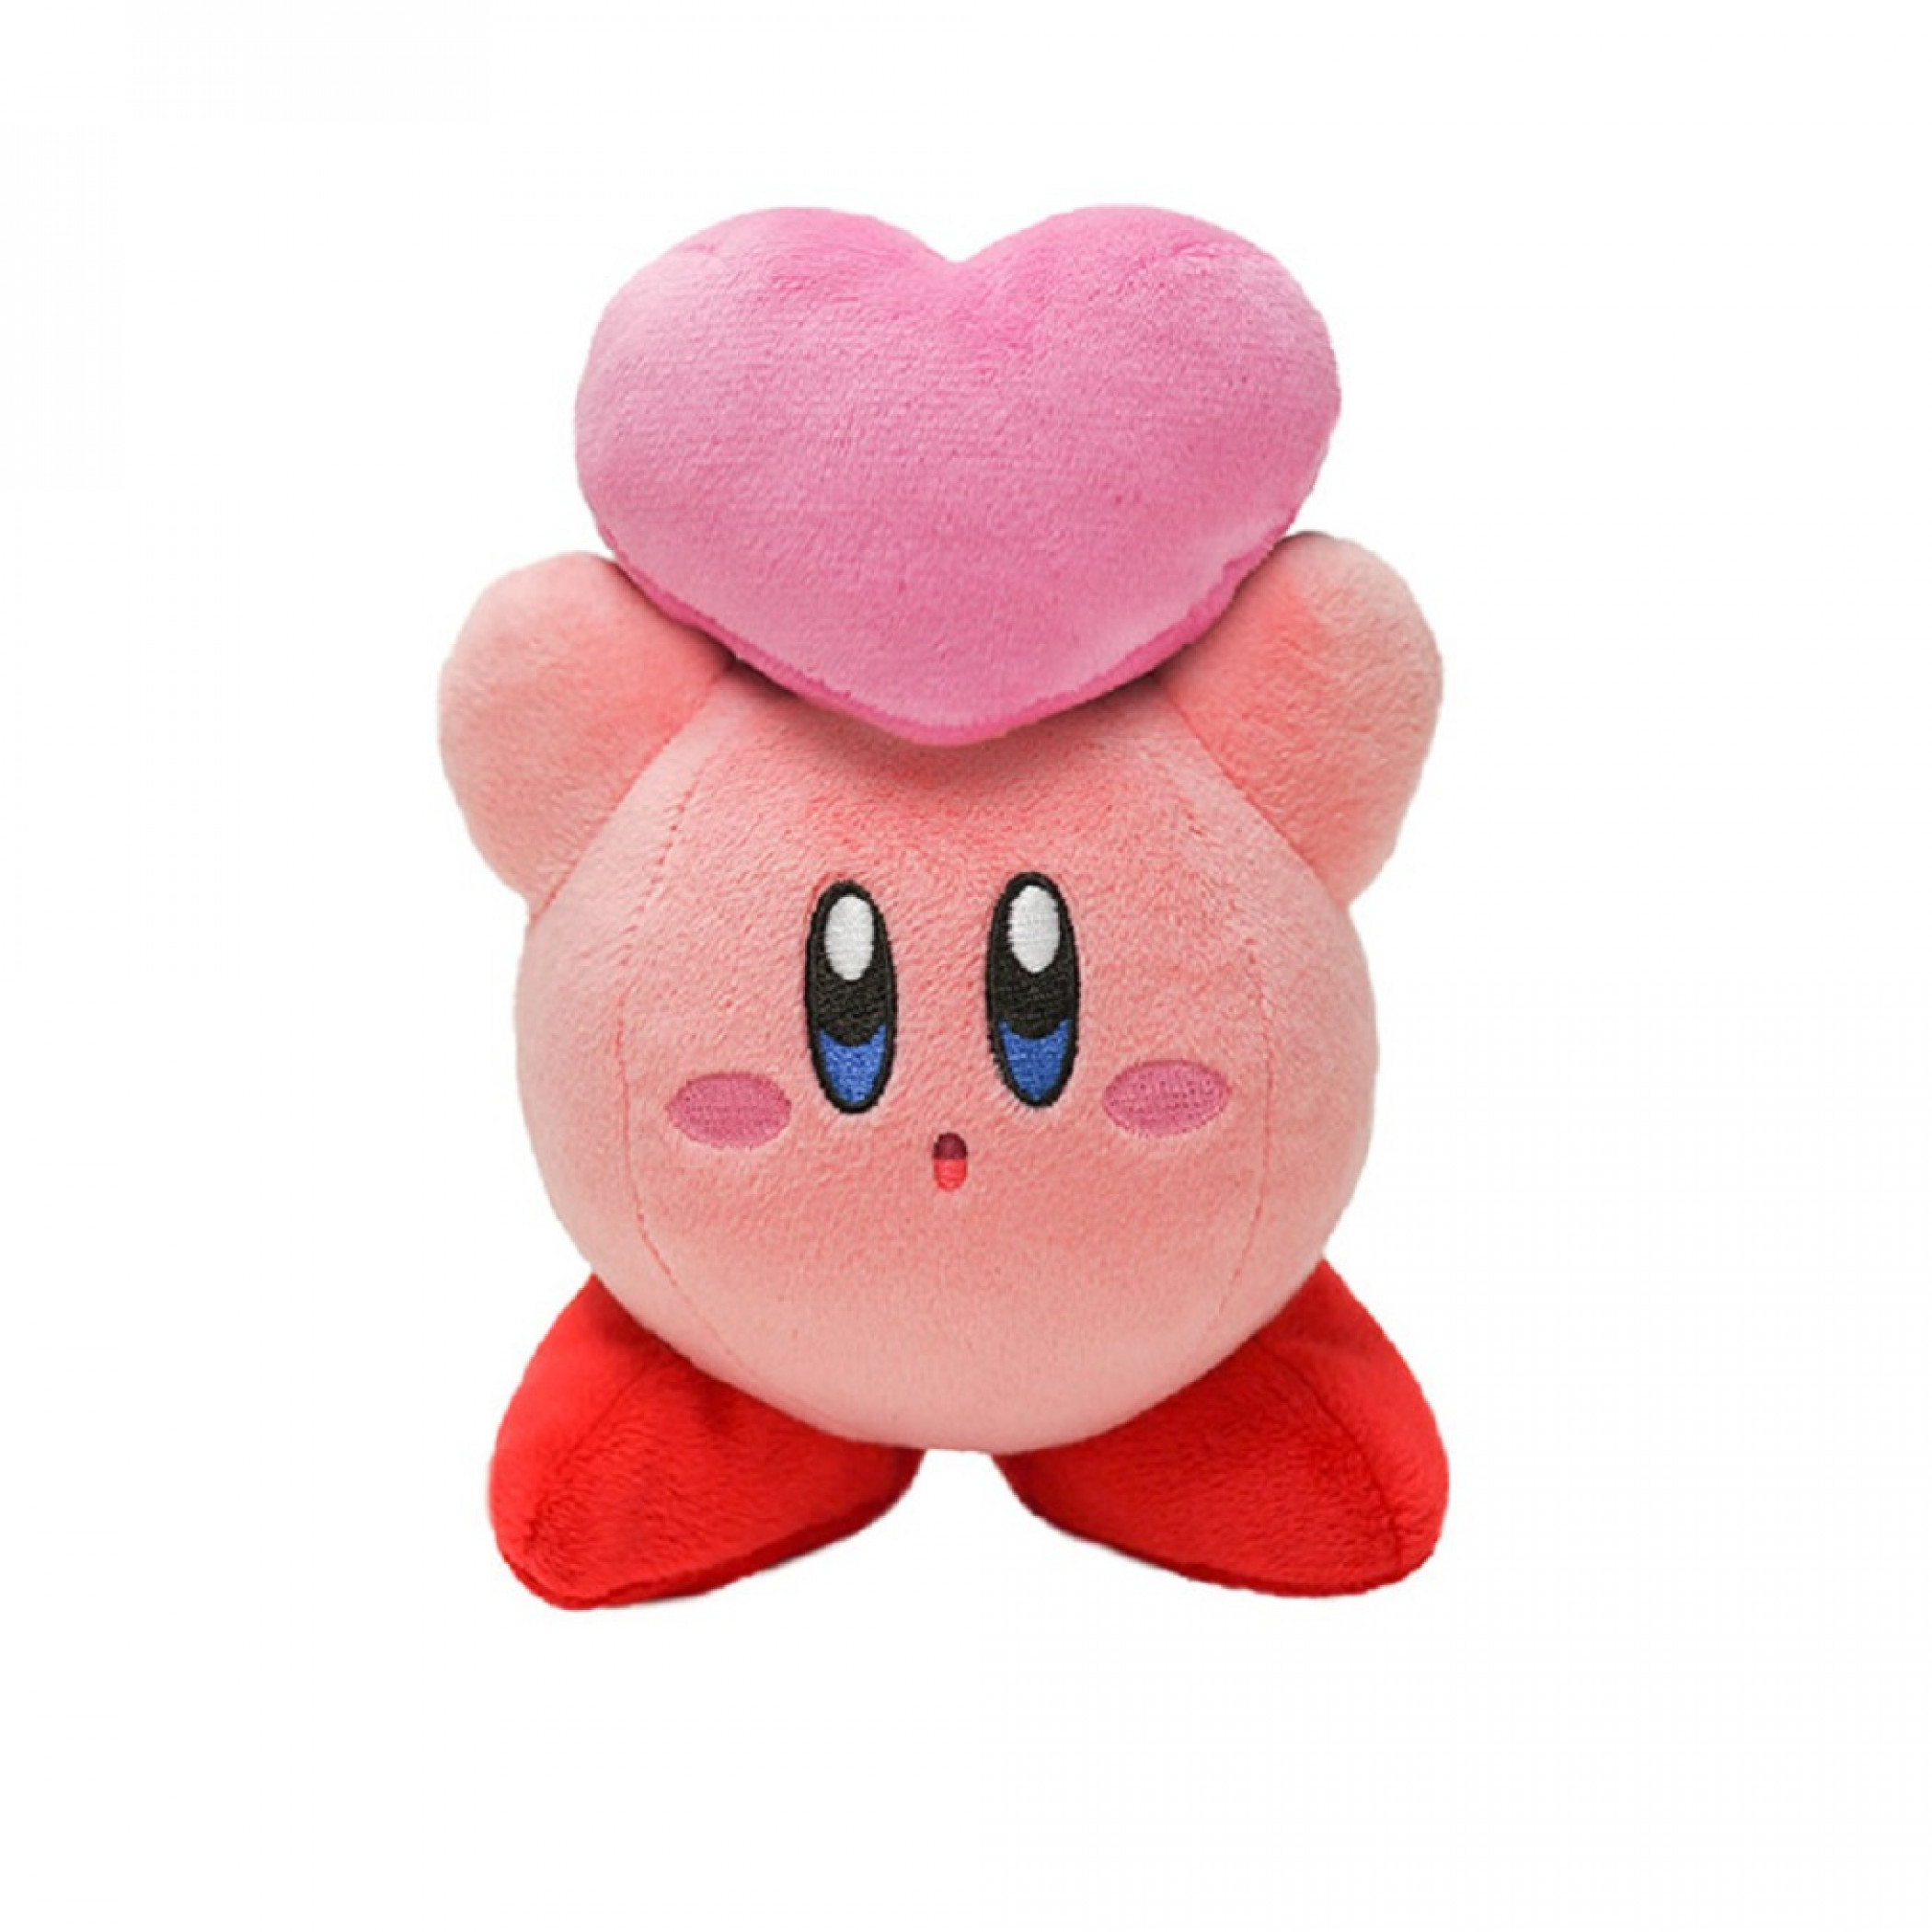 Kirby Heart 5" Plush Toy